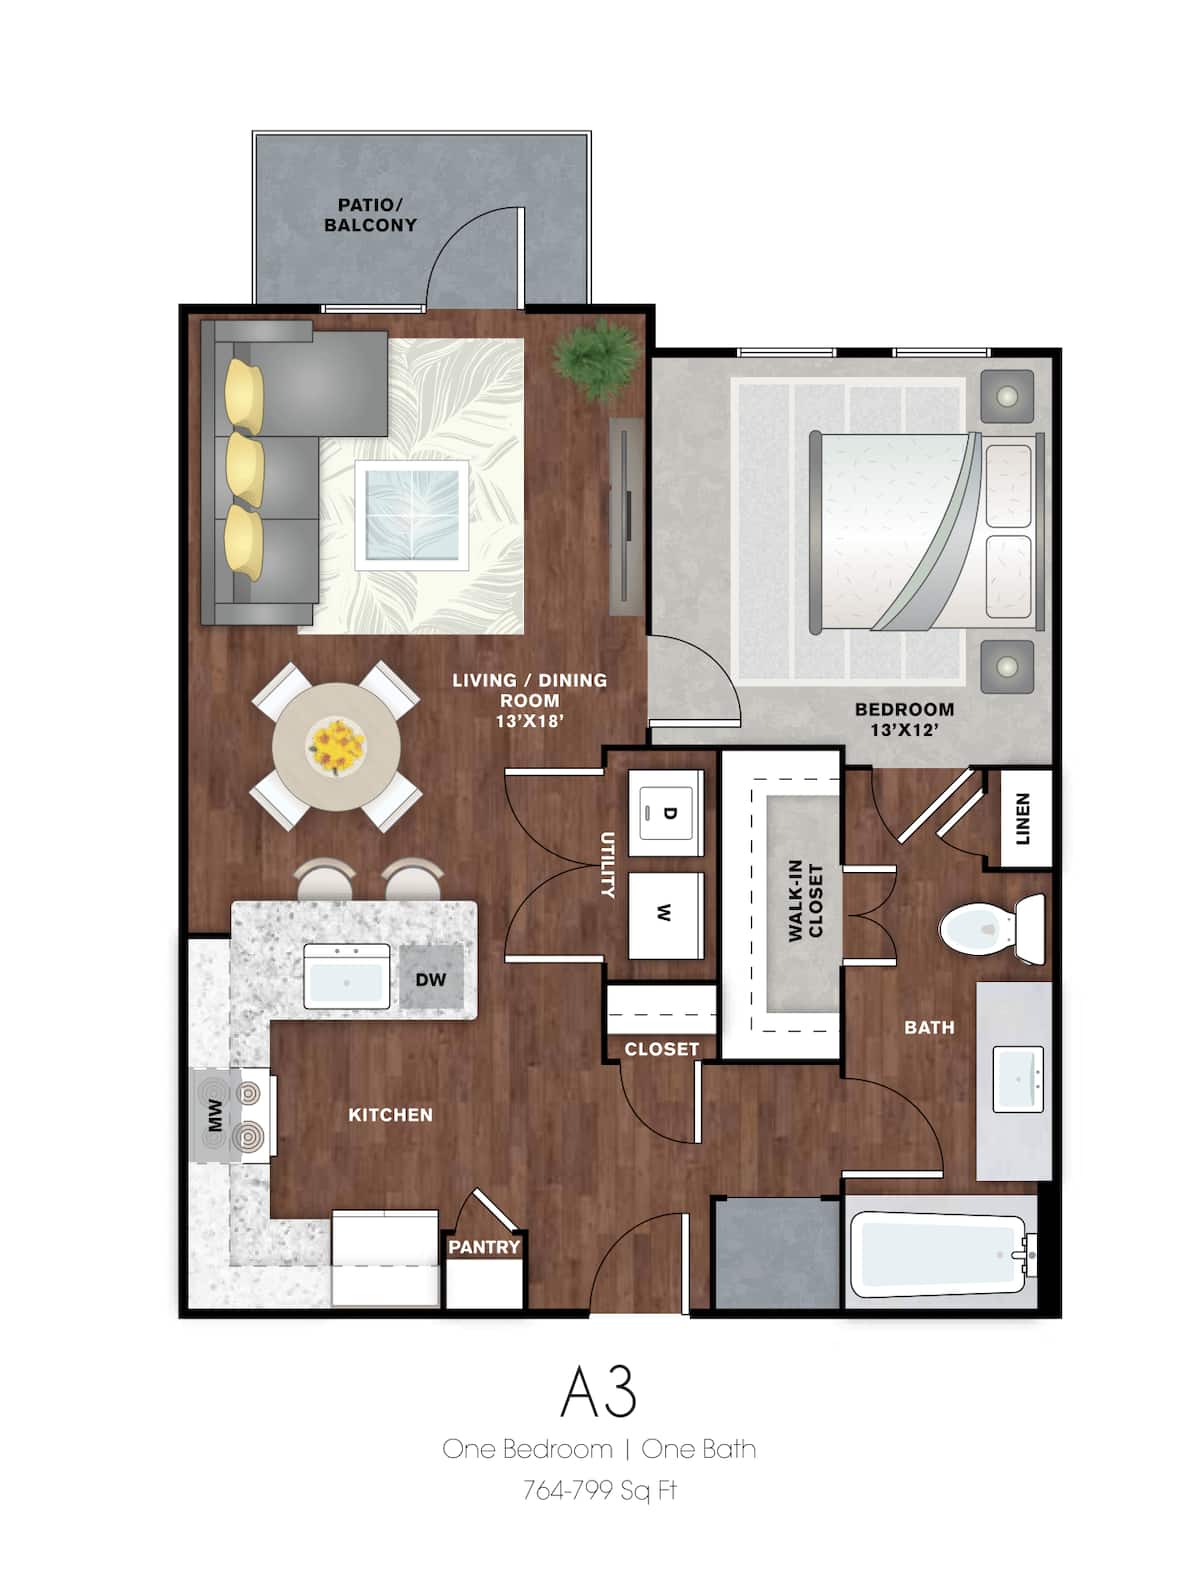 Floorplan diagram for A14, showing 1 bedroom